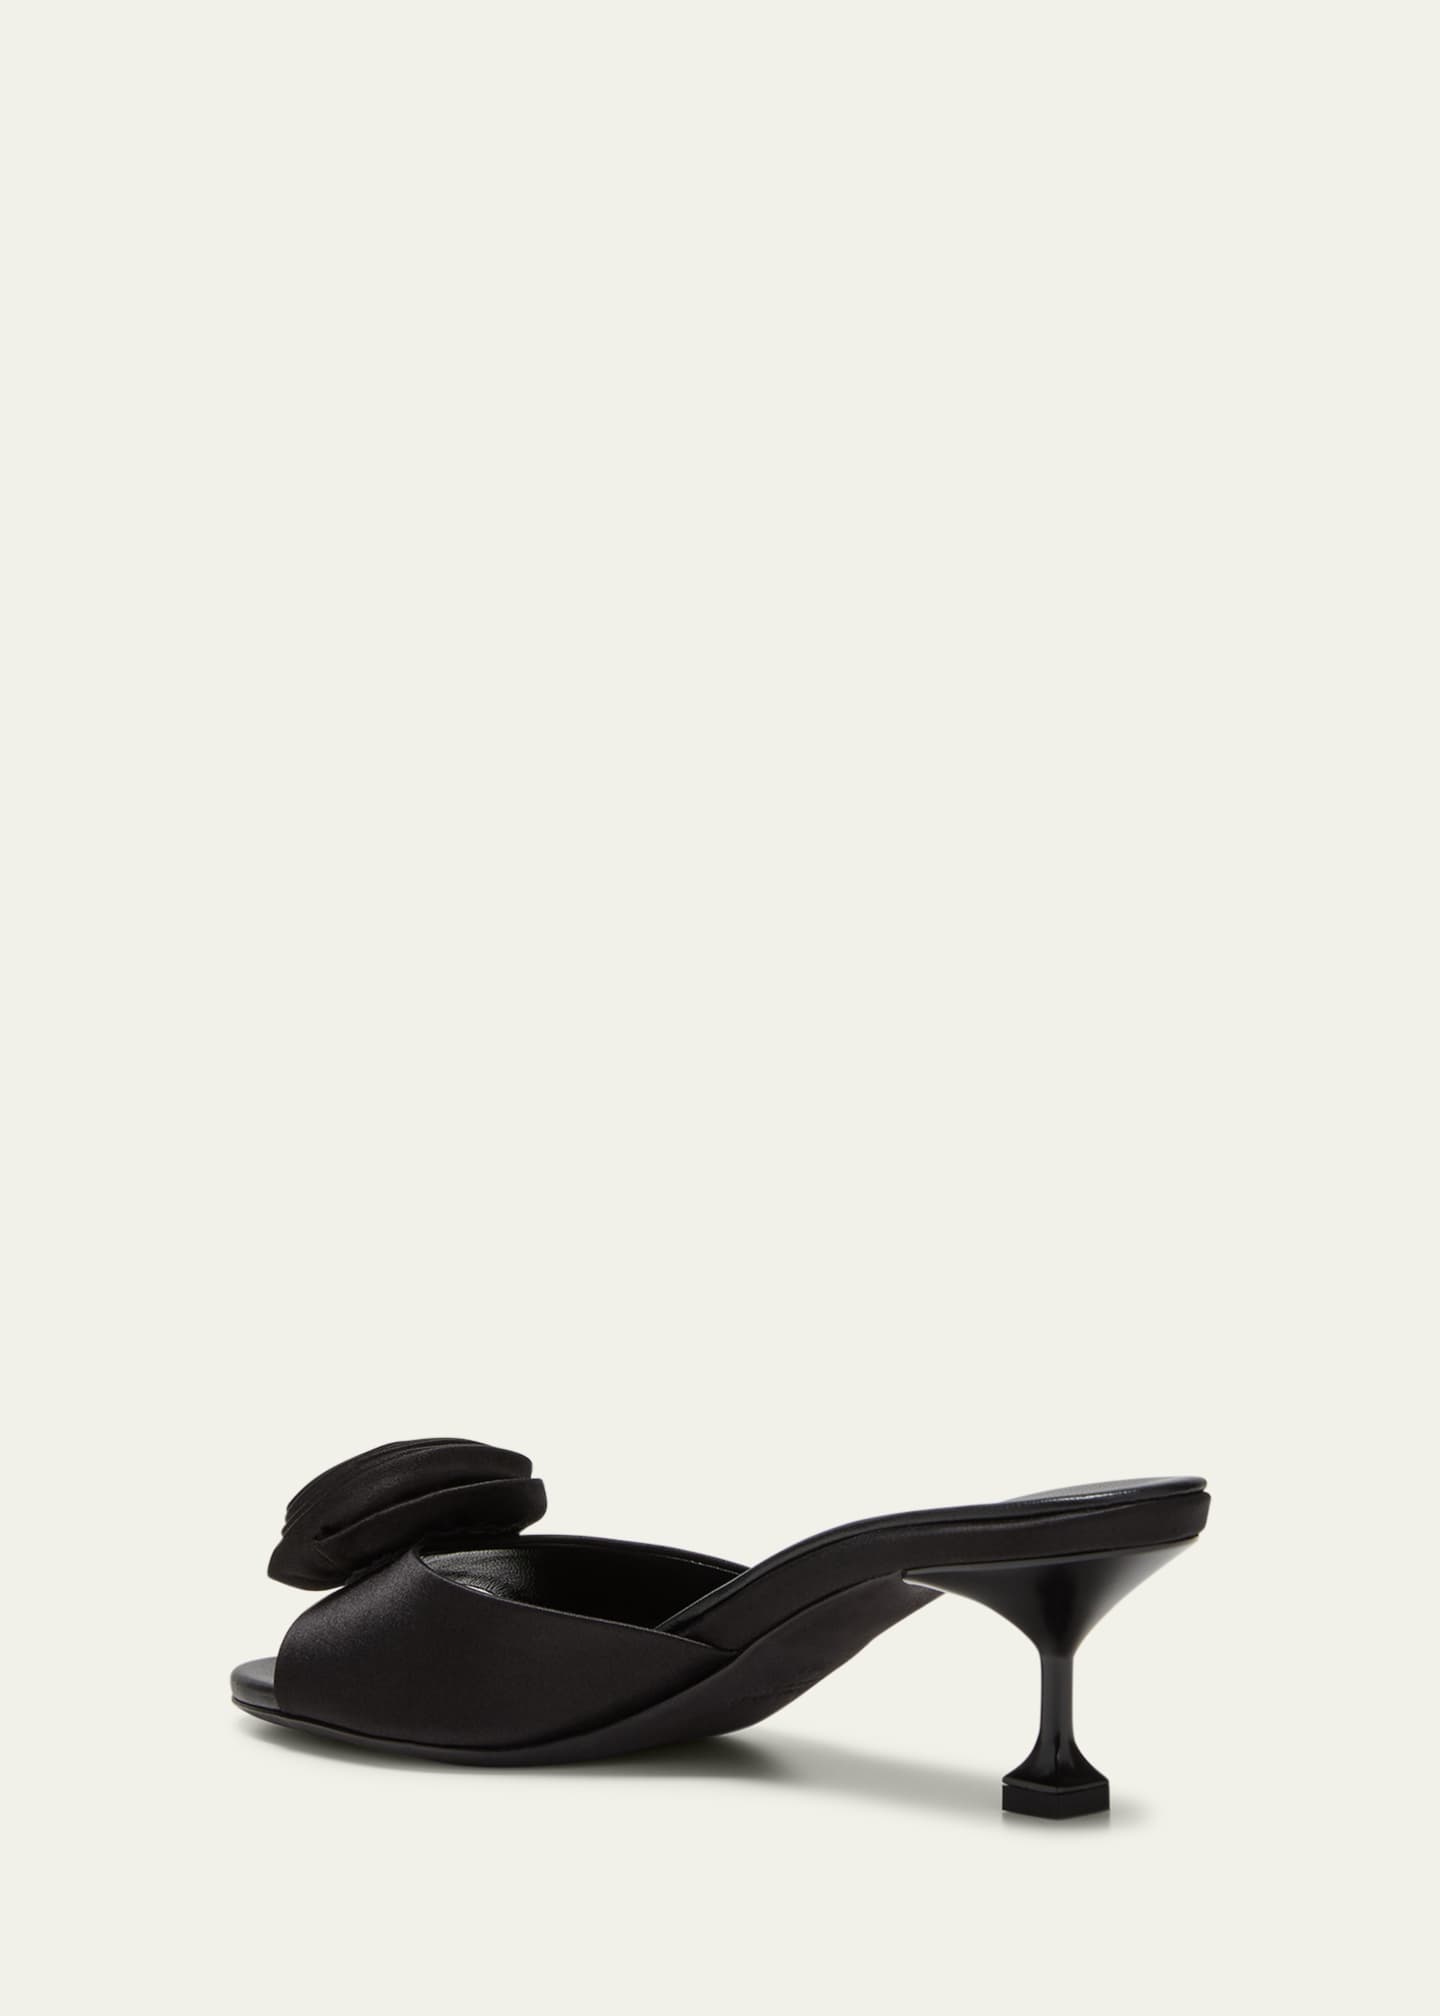 Miu Miu Patent Bow Kitten-Heel Slingback Pumps - Bergdorf Goodman